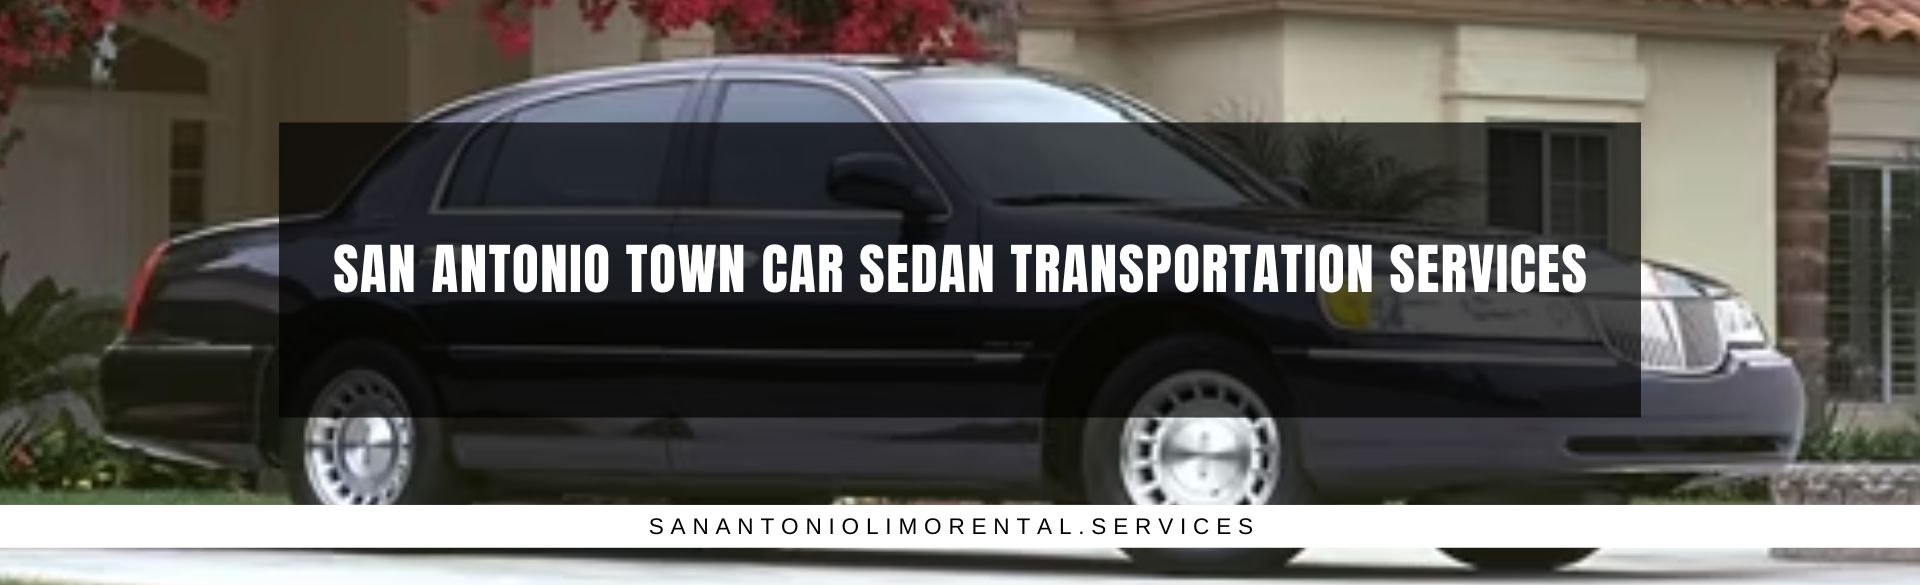 San Antonio Town Car Sedan Transportation Services